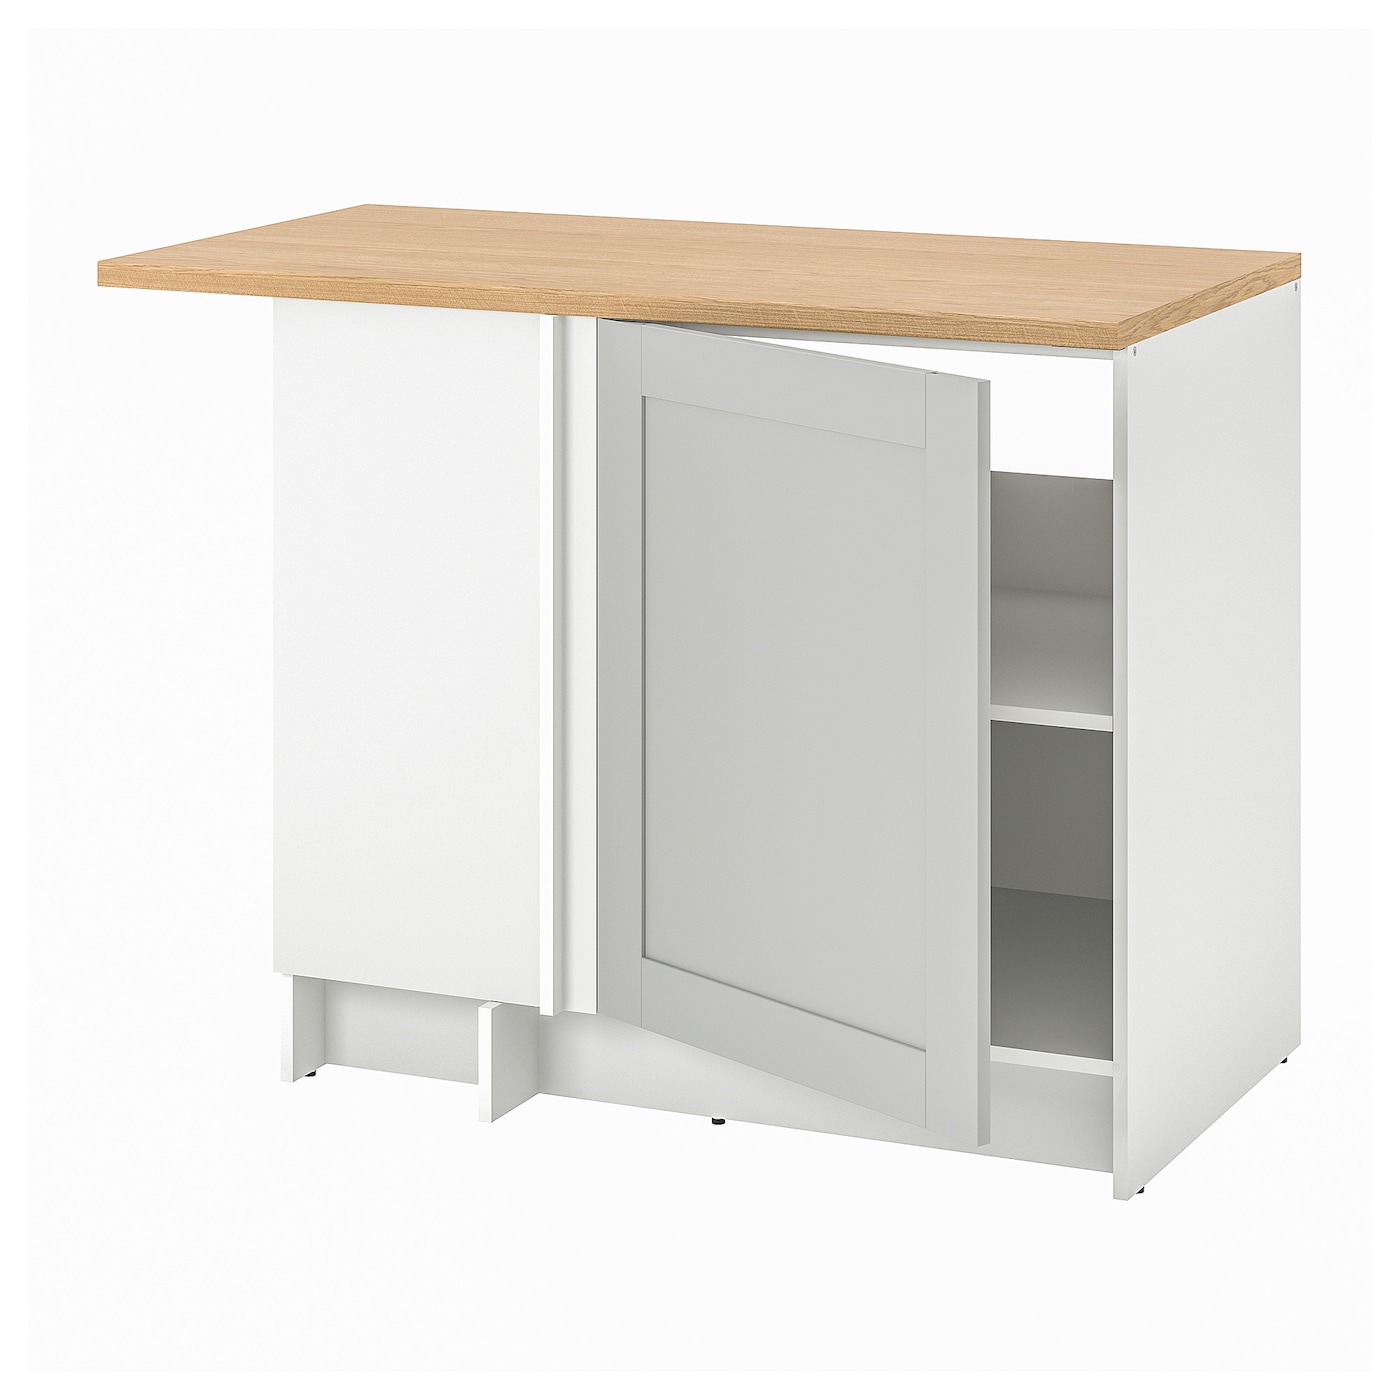 Шкаф для хранения - IKEA KNOXHULT/КНОКХУЛЬТ ИКЕА, 61х91х100 см, белый/светло-серый